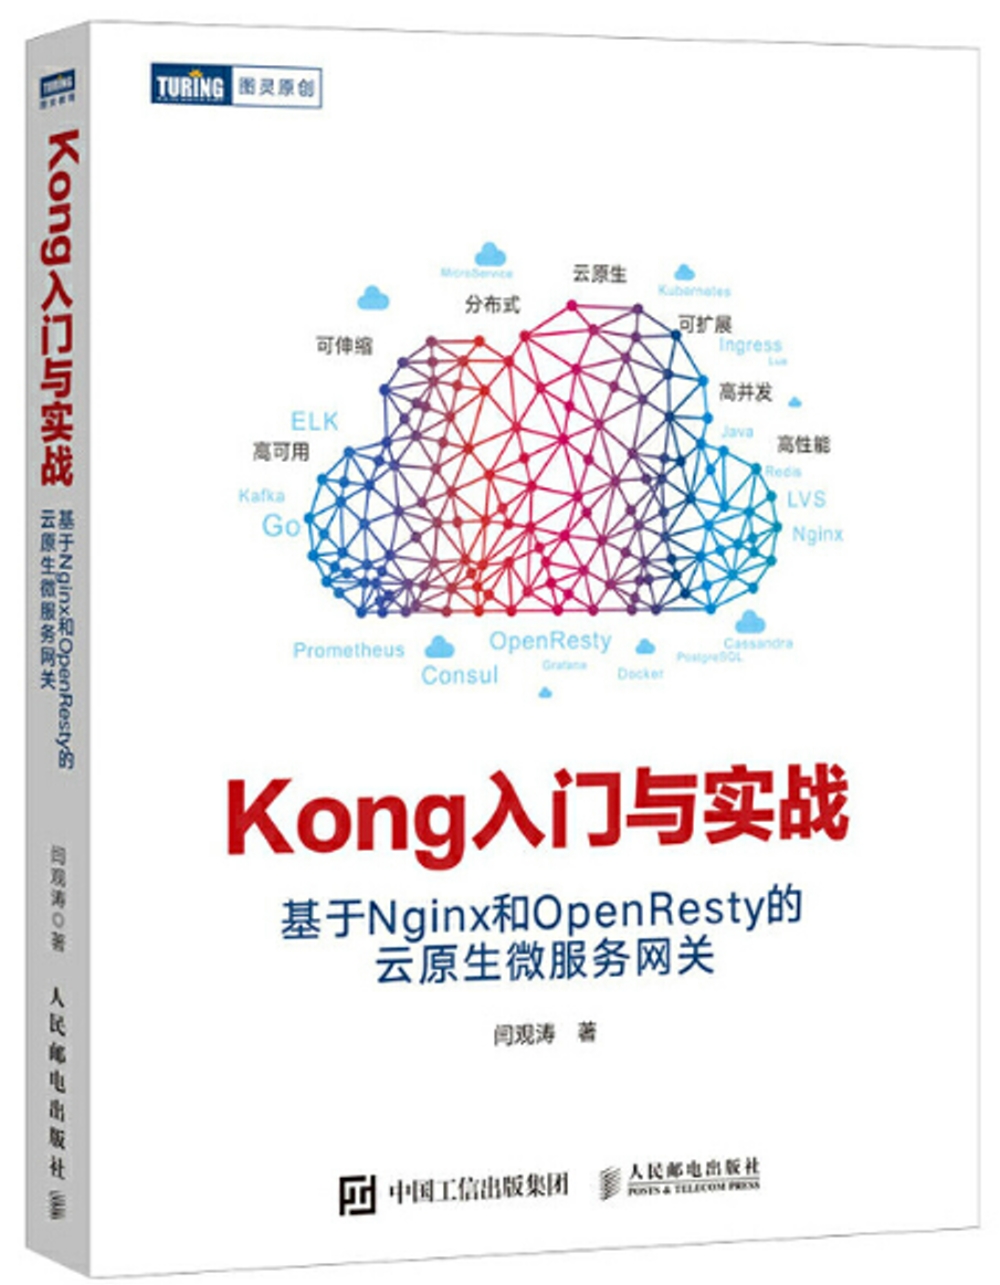 Kong入門與實戰：基於Nginx和OpenResty的雲原生微服務網關